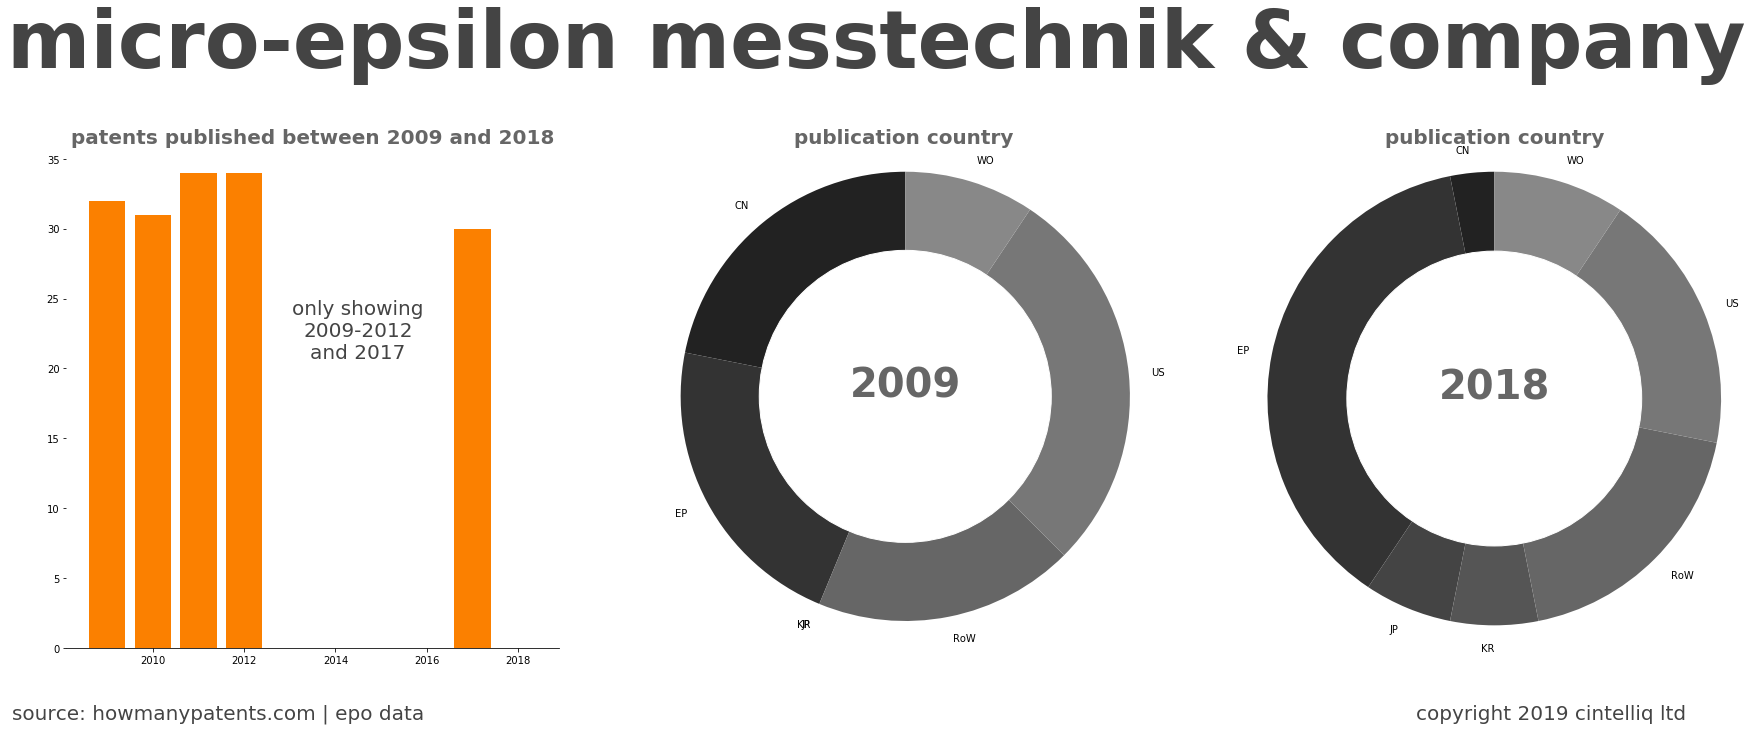 summary of patents for Micro-Epsilon Messtechnik & Company